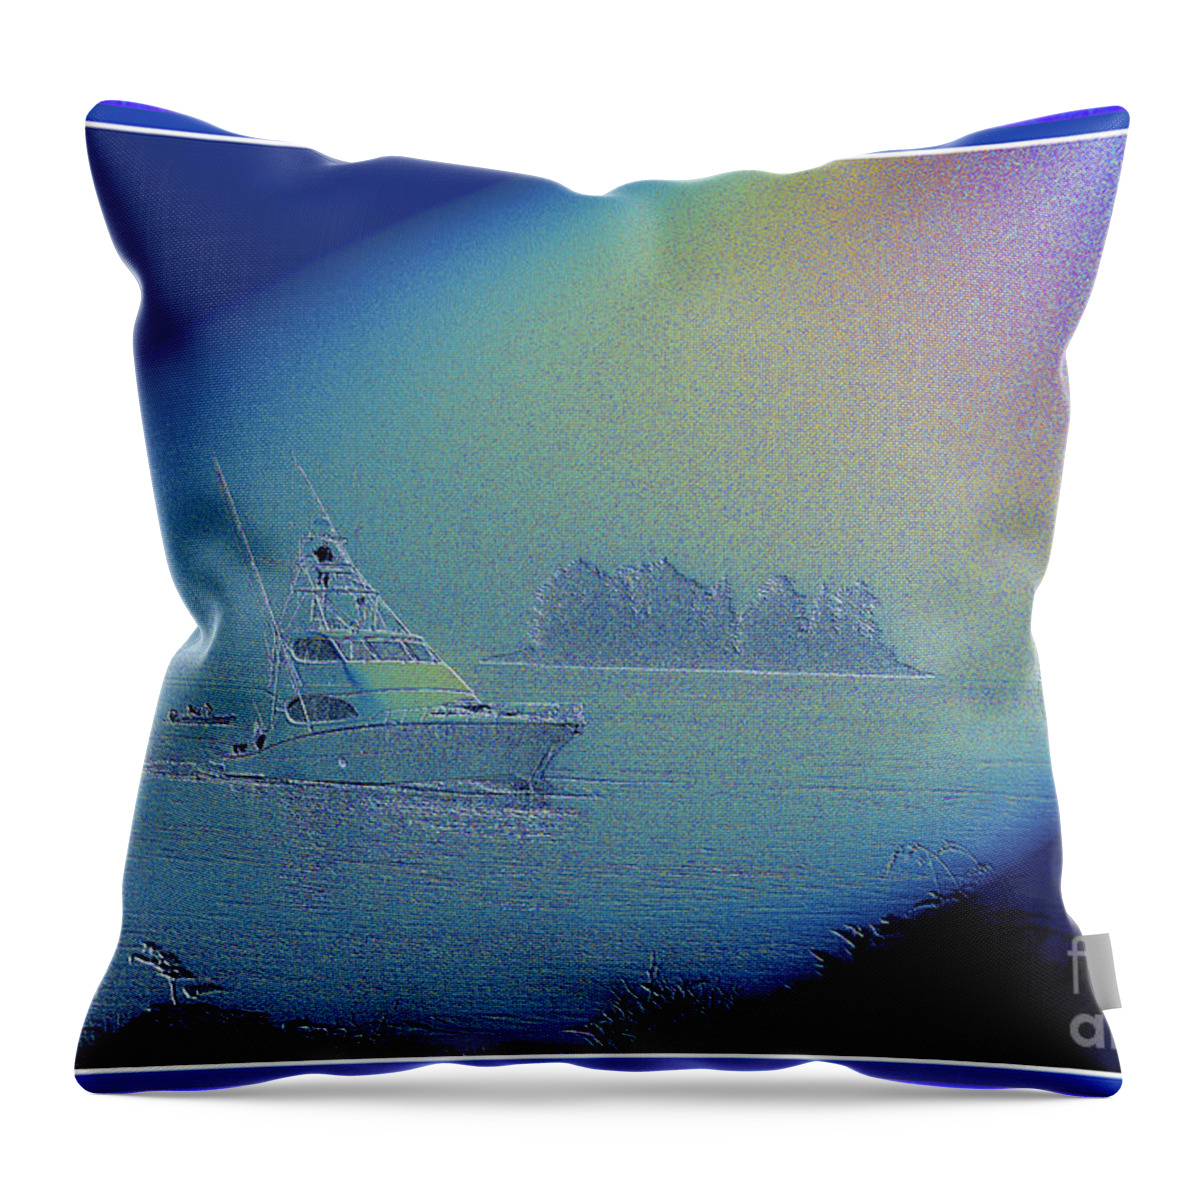 Digital Art Throw Pillow featuring the digital art Starlight Cruising by Victoria Harrington